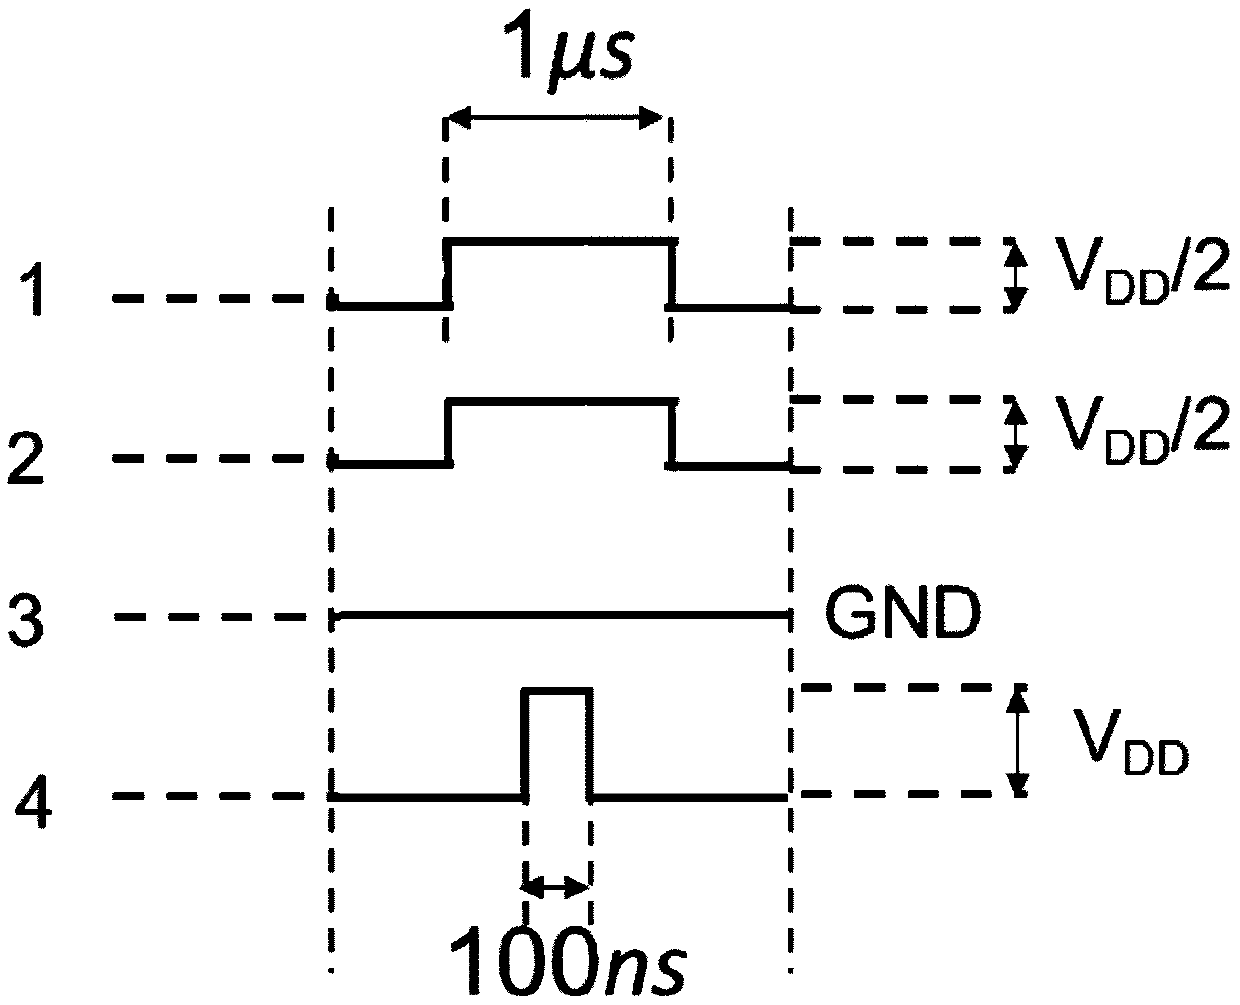 Method of operation based on memristor array